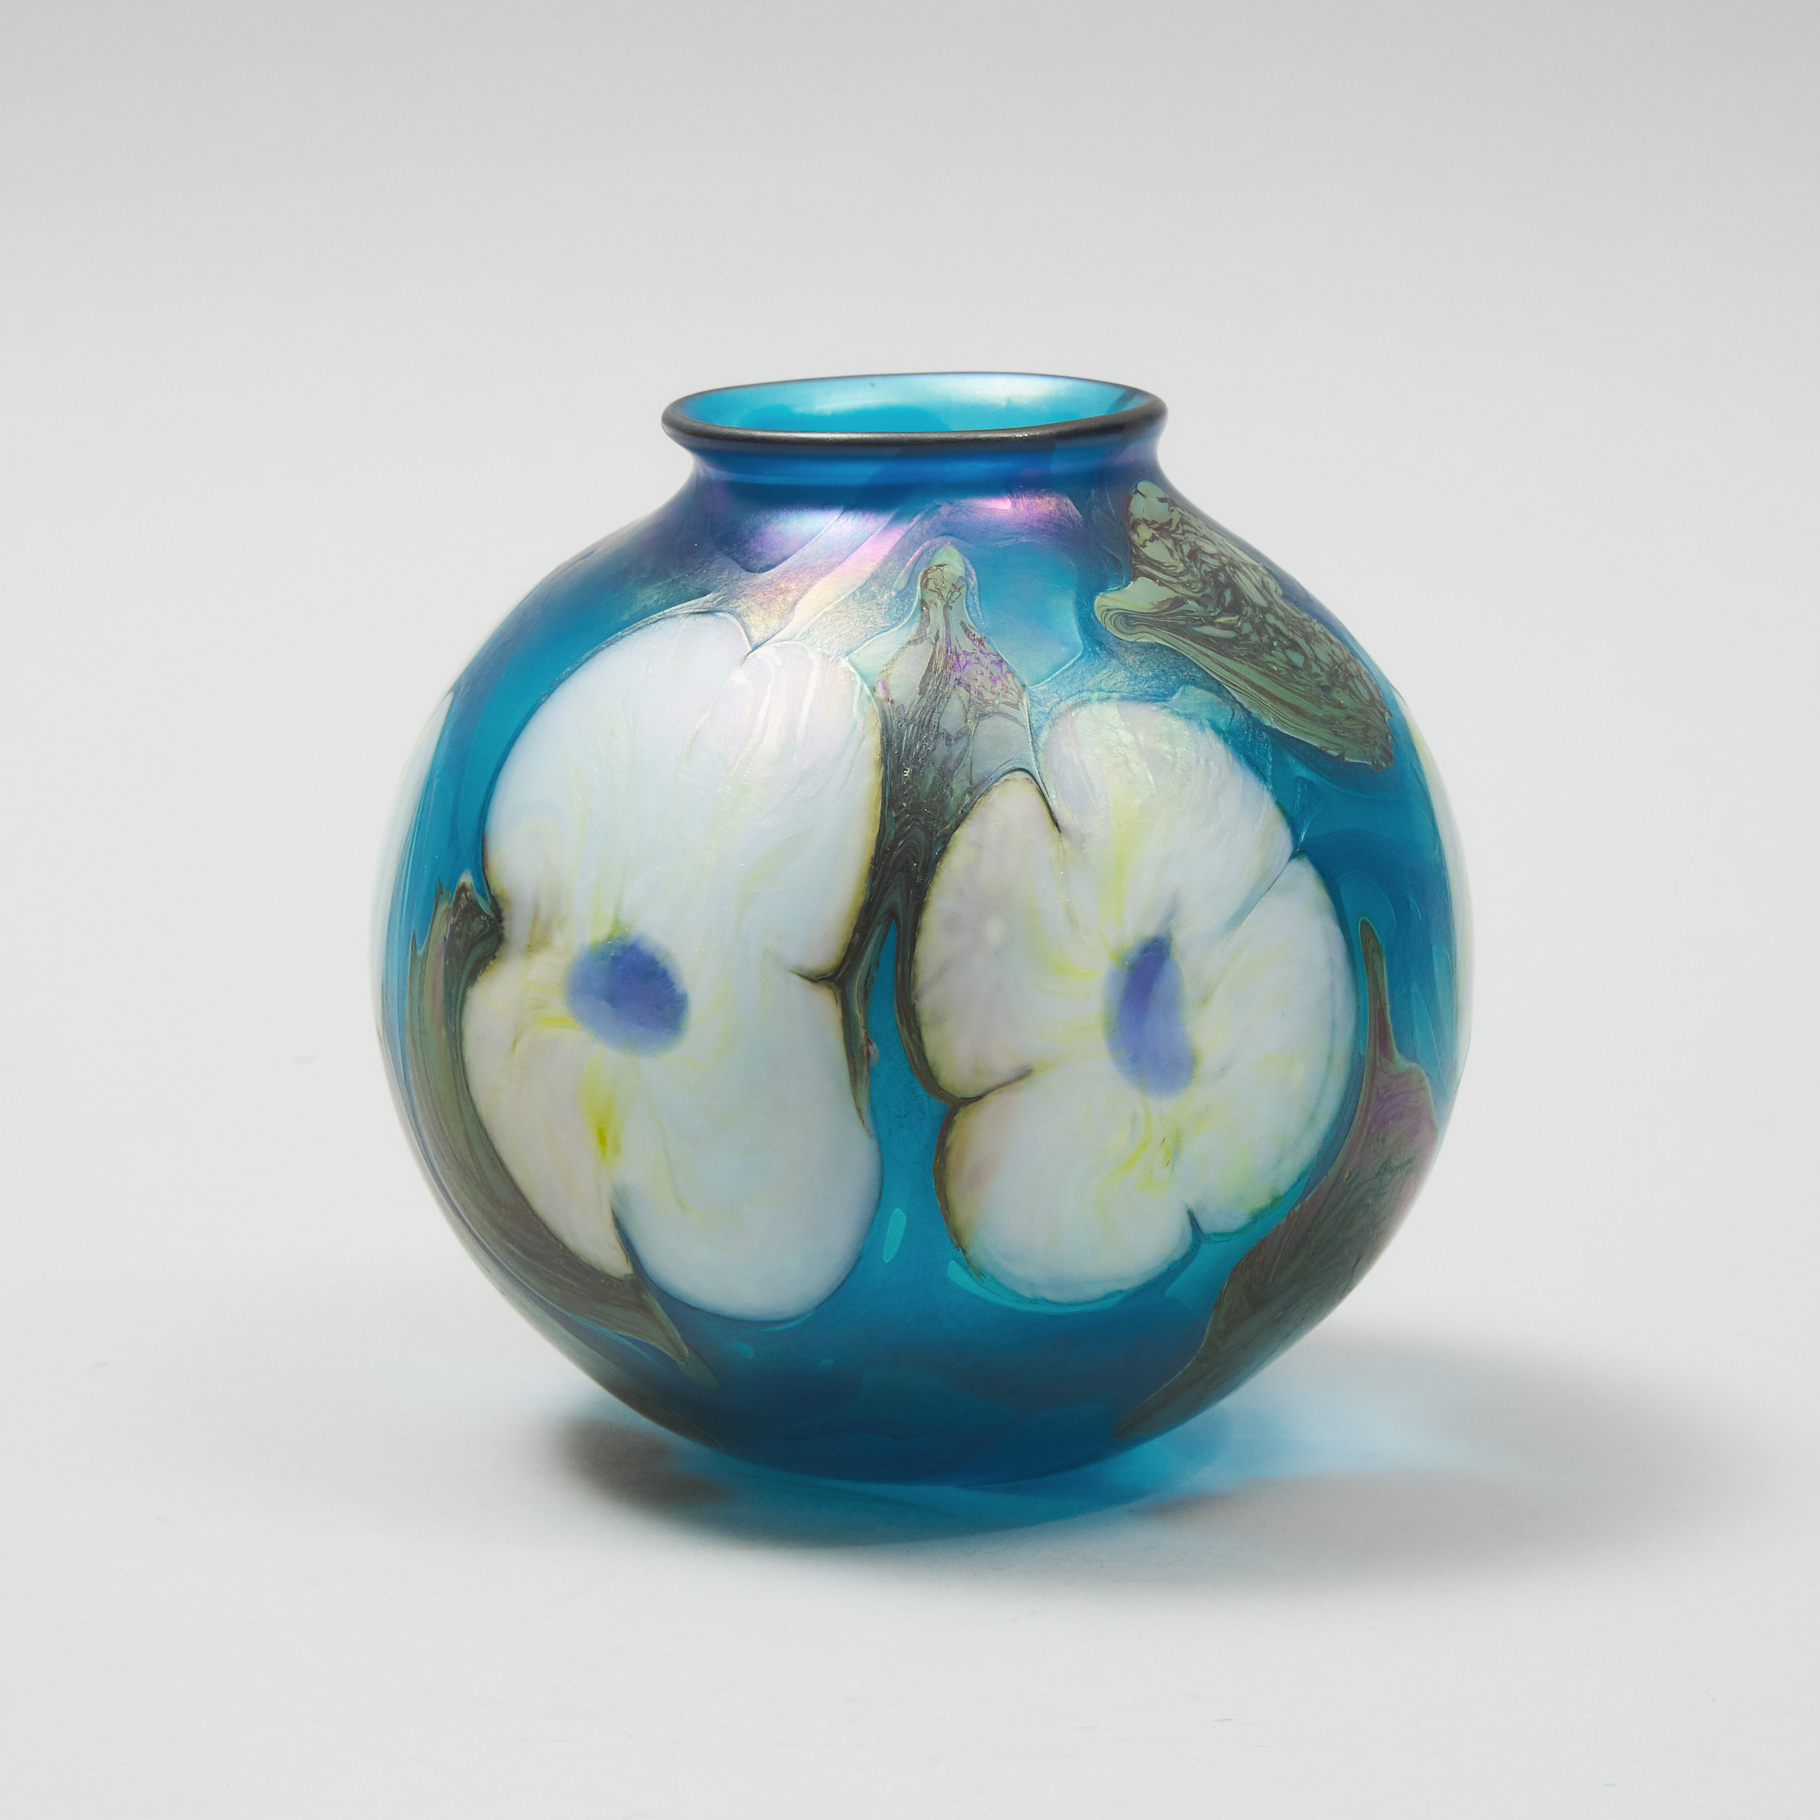 Charles Lotton (American, b.1935), Iridescent Multi Flora Glass Vase, 1975